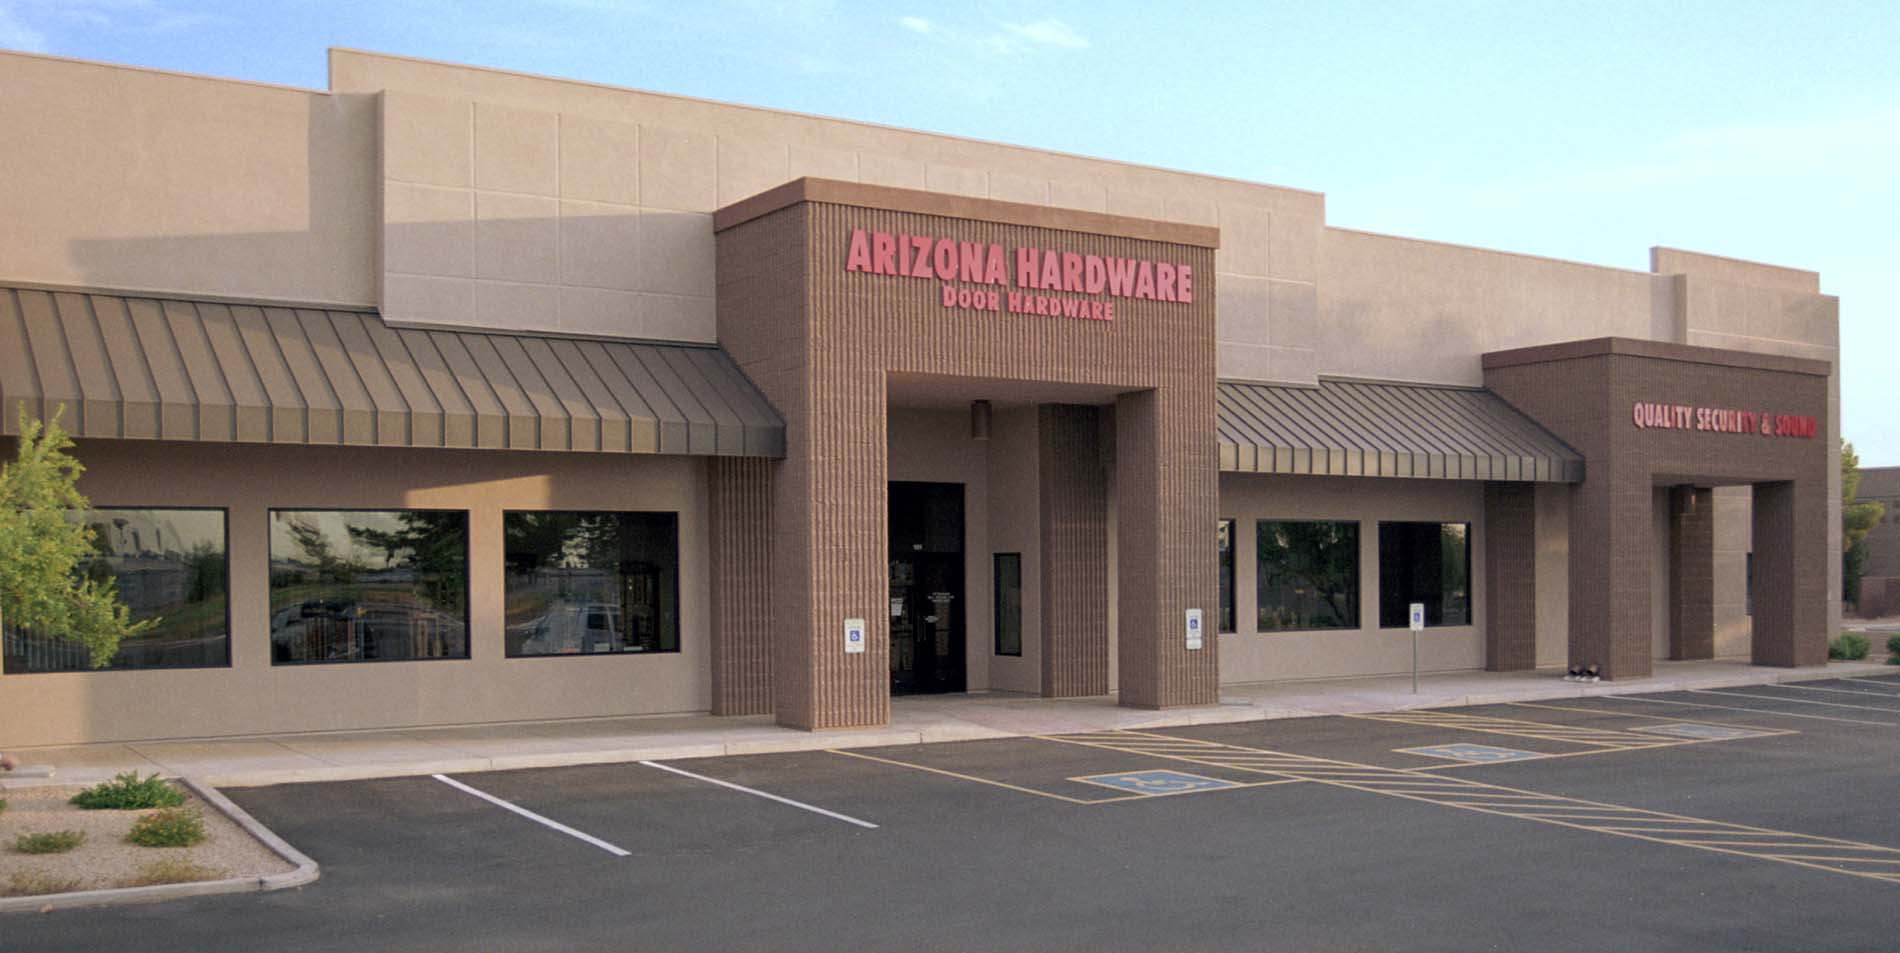 Arizona Hardware Showroom Entrance